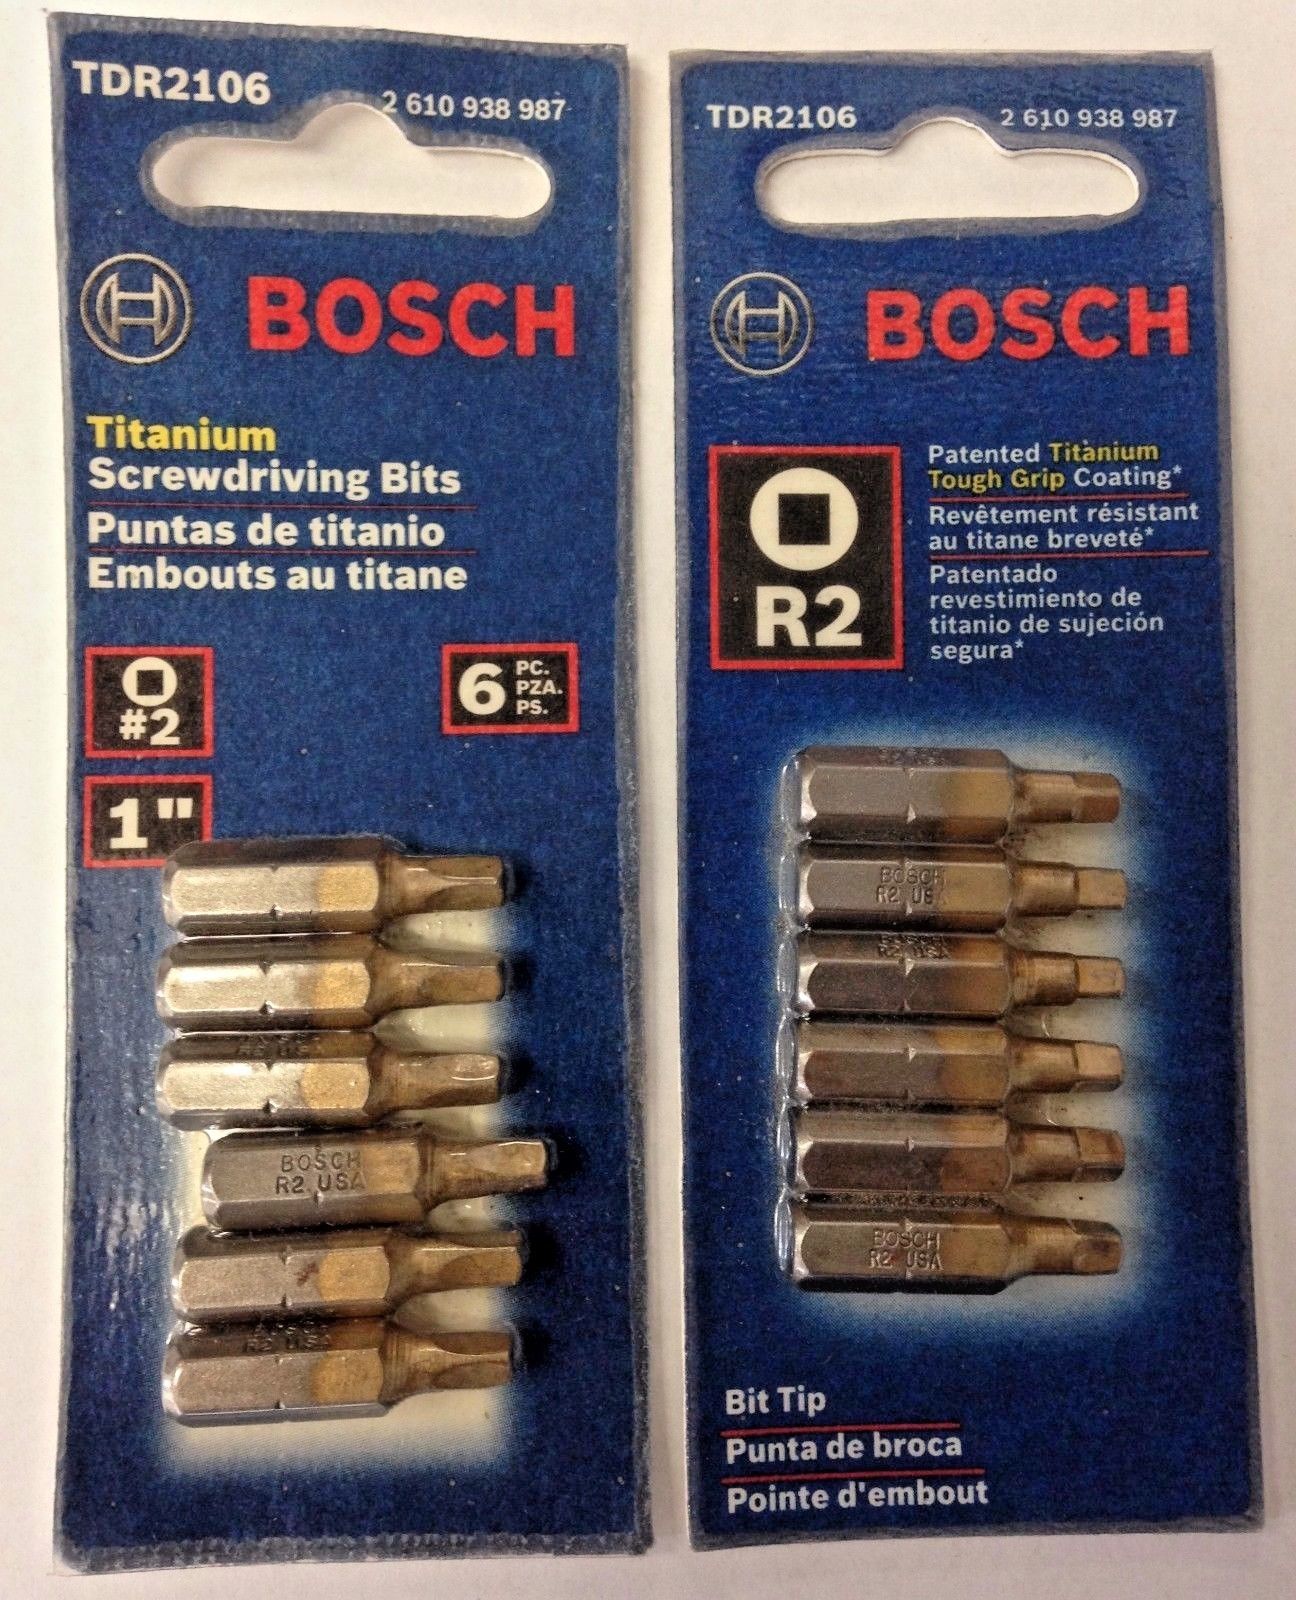 Bosch TDR2106 R2 1" Square Drive Titanium Screw Bit Tips 2- 6 Packs USA